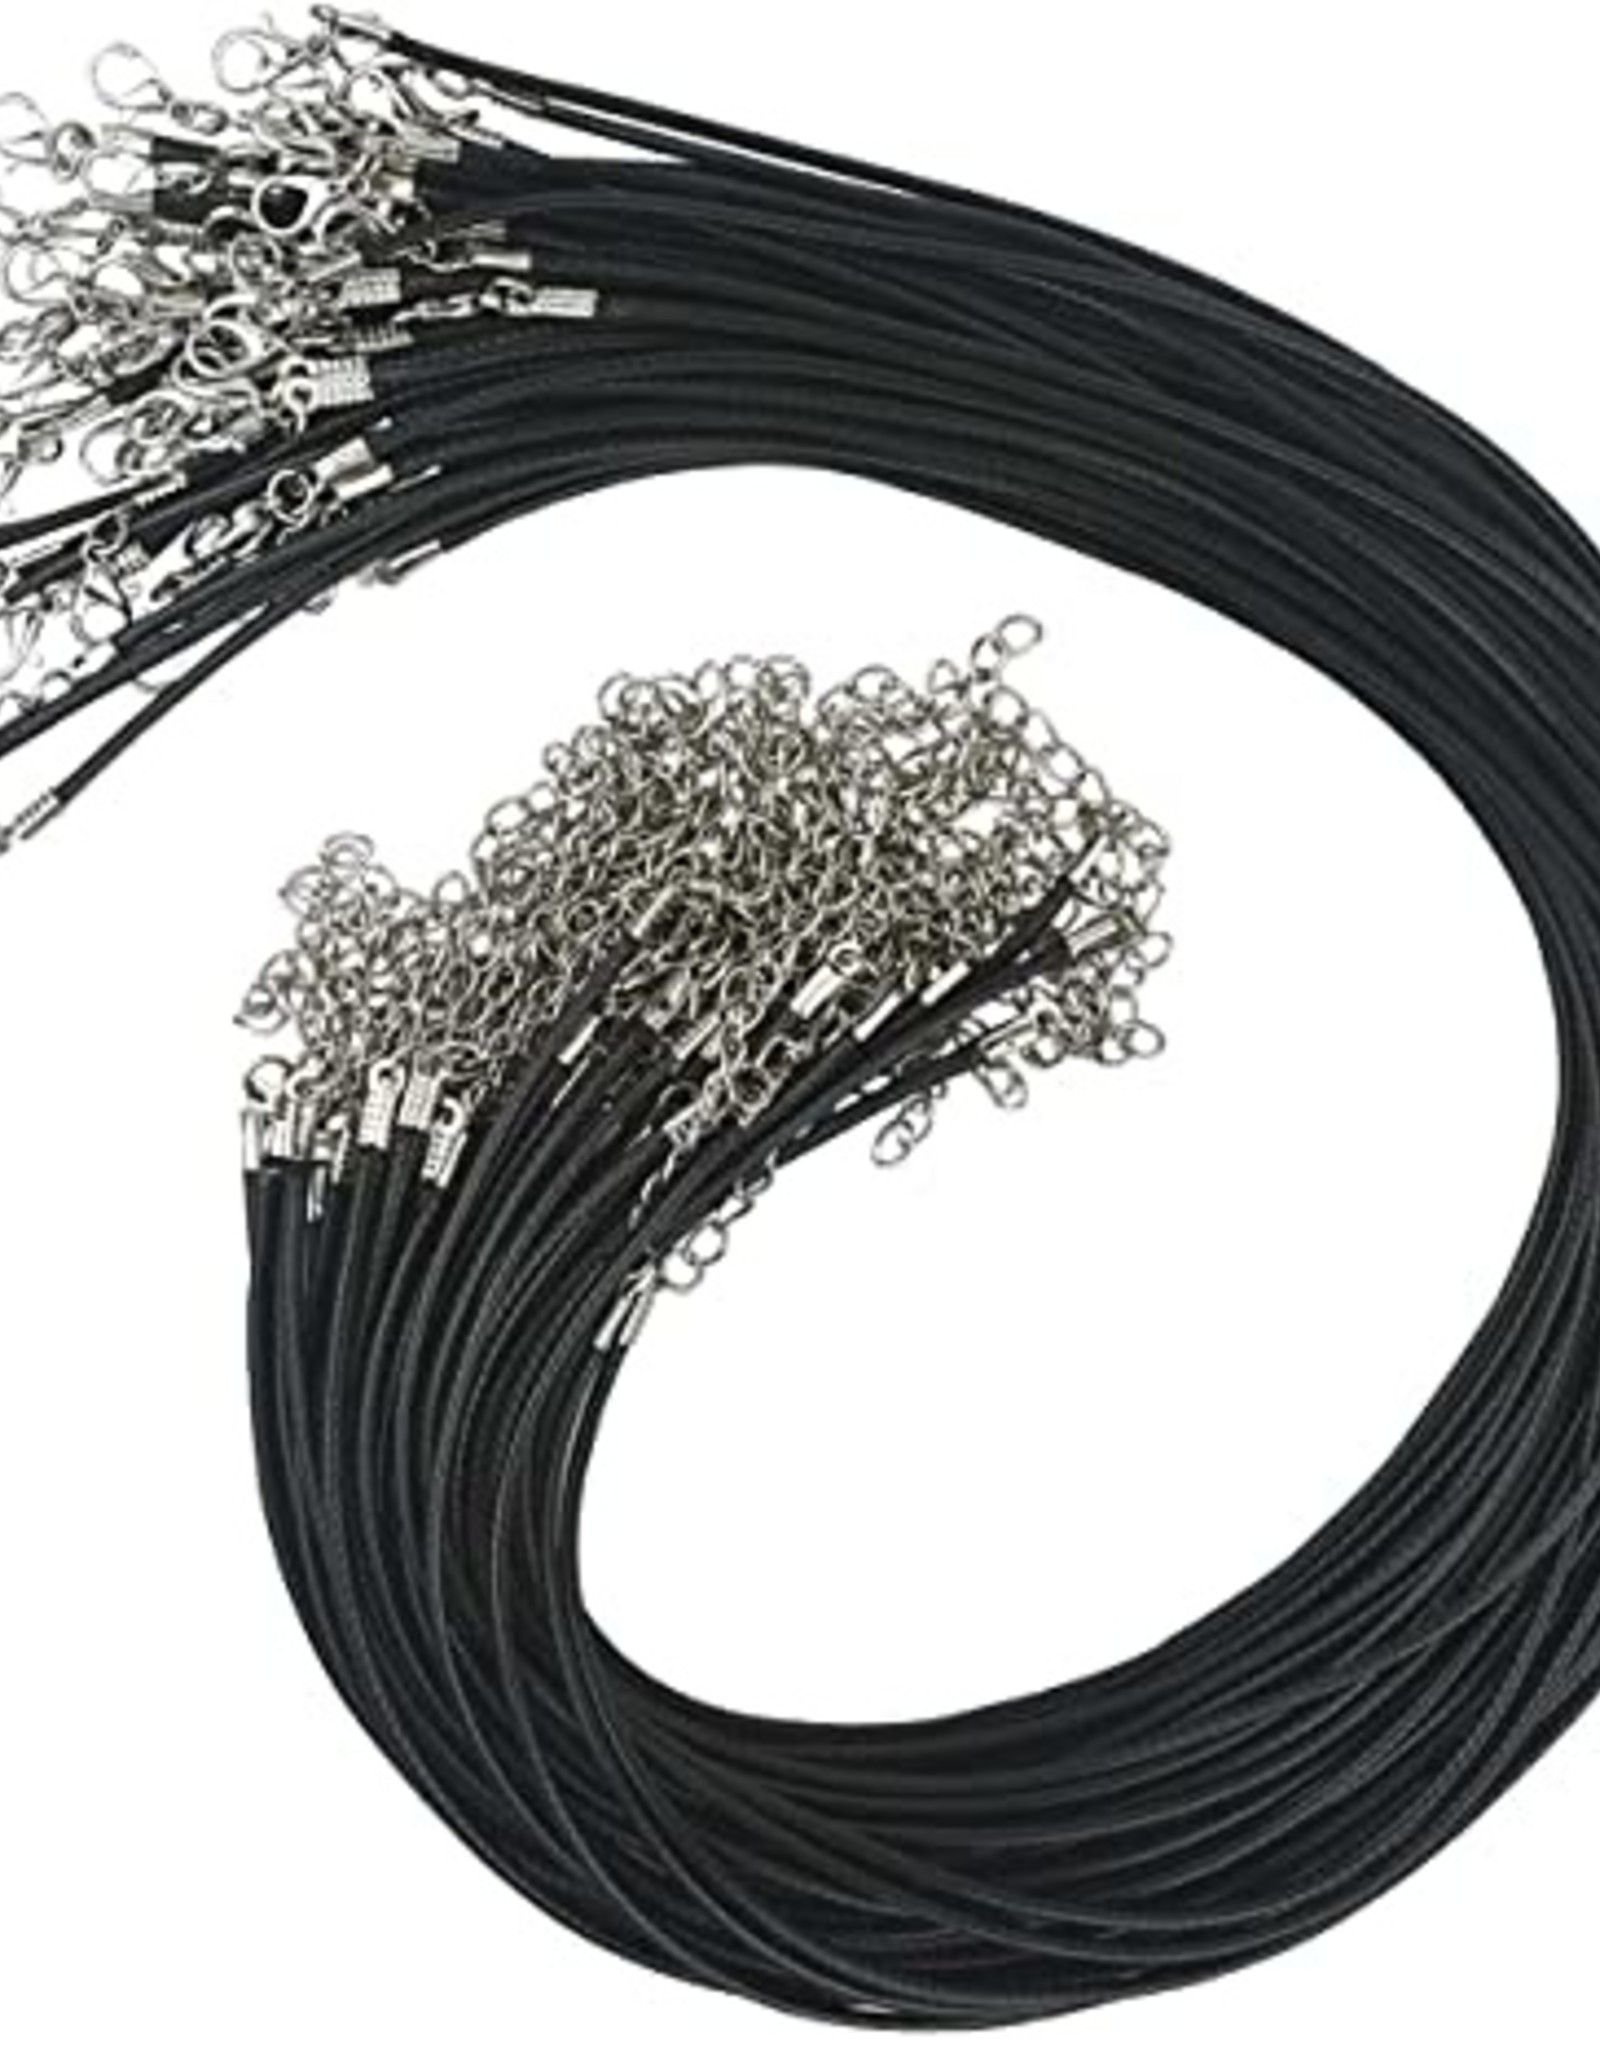 Black Waxed Necklace Cord Chain - Magic Bag - Becca